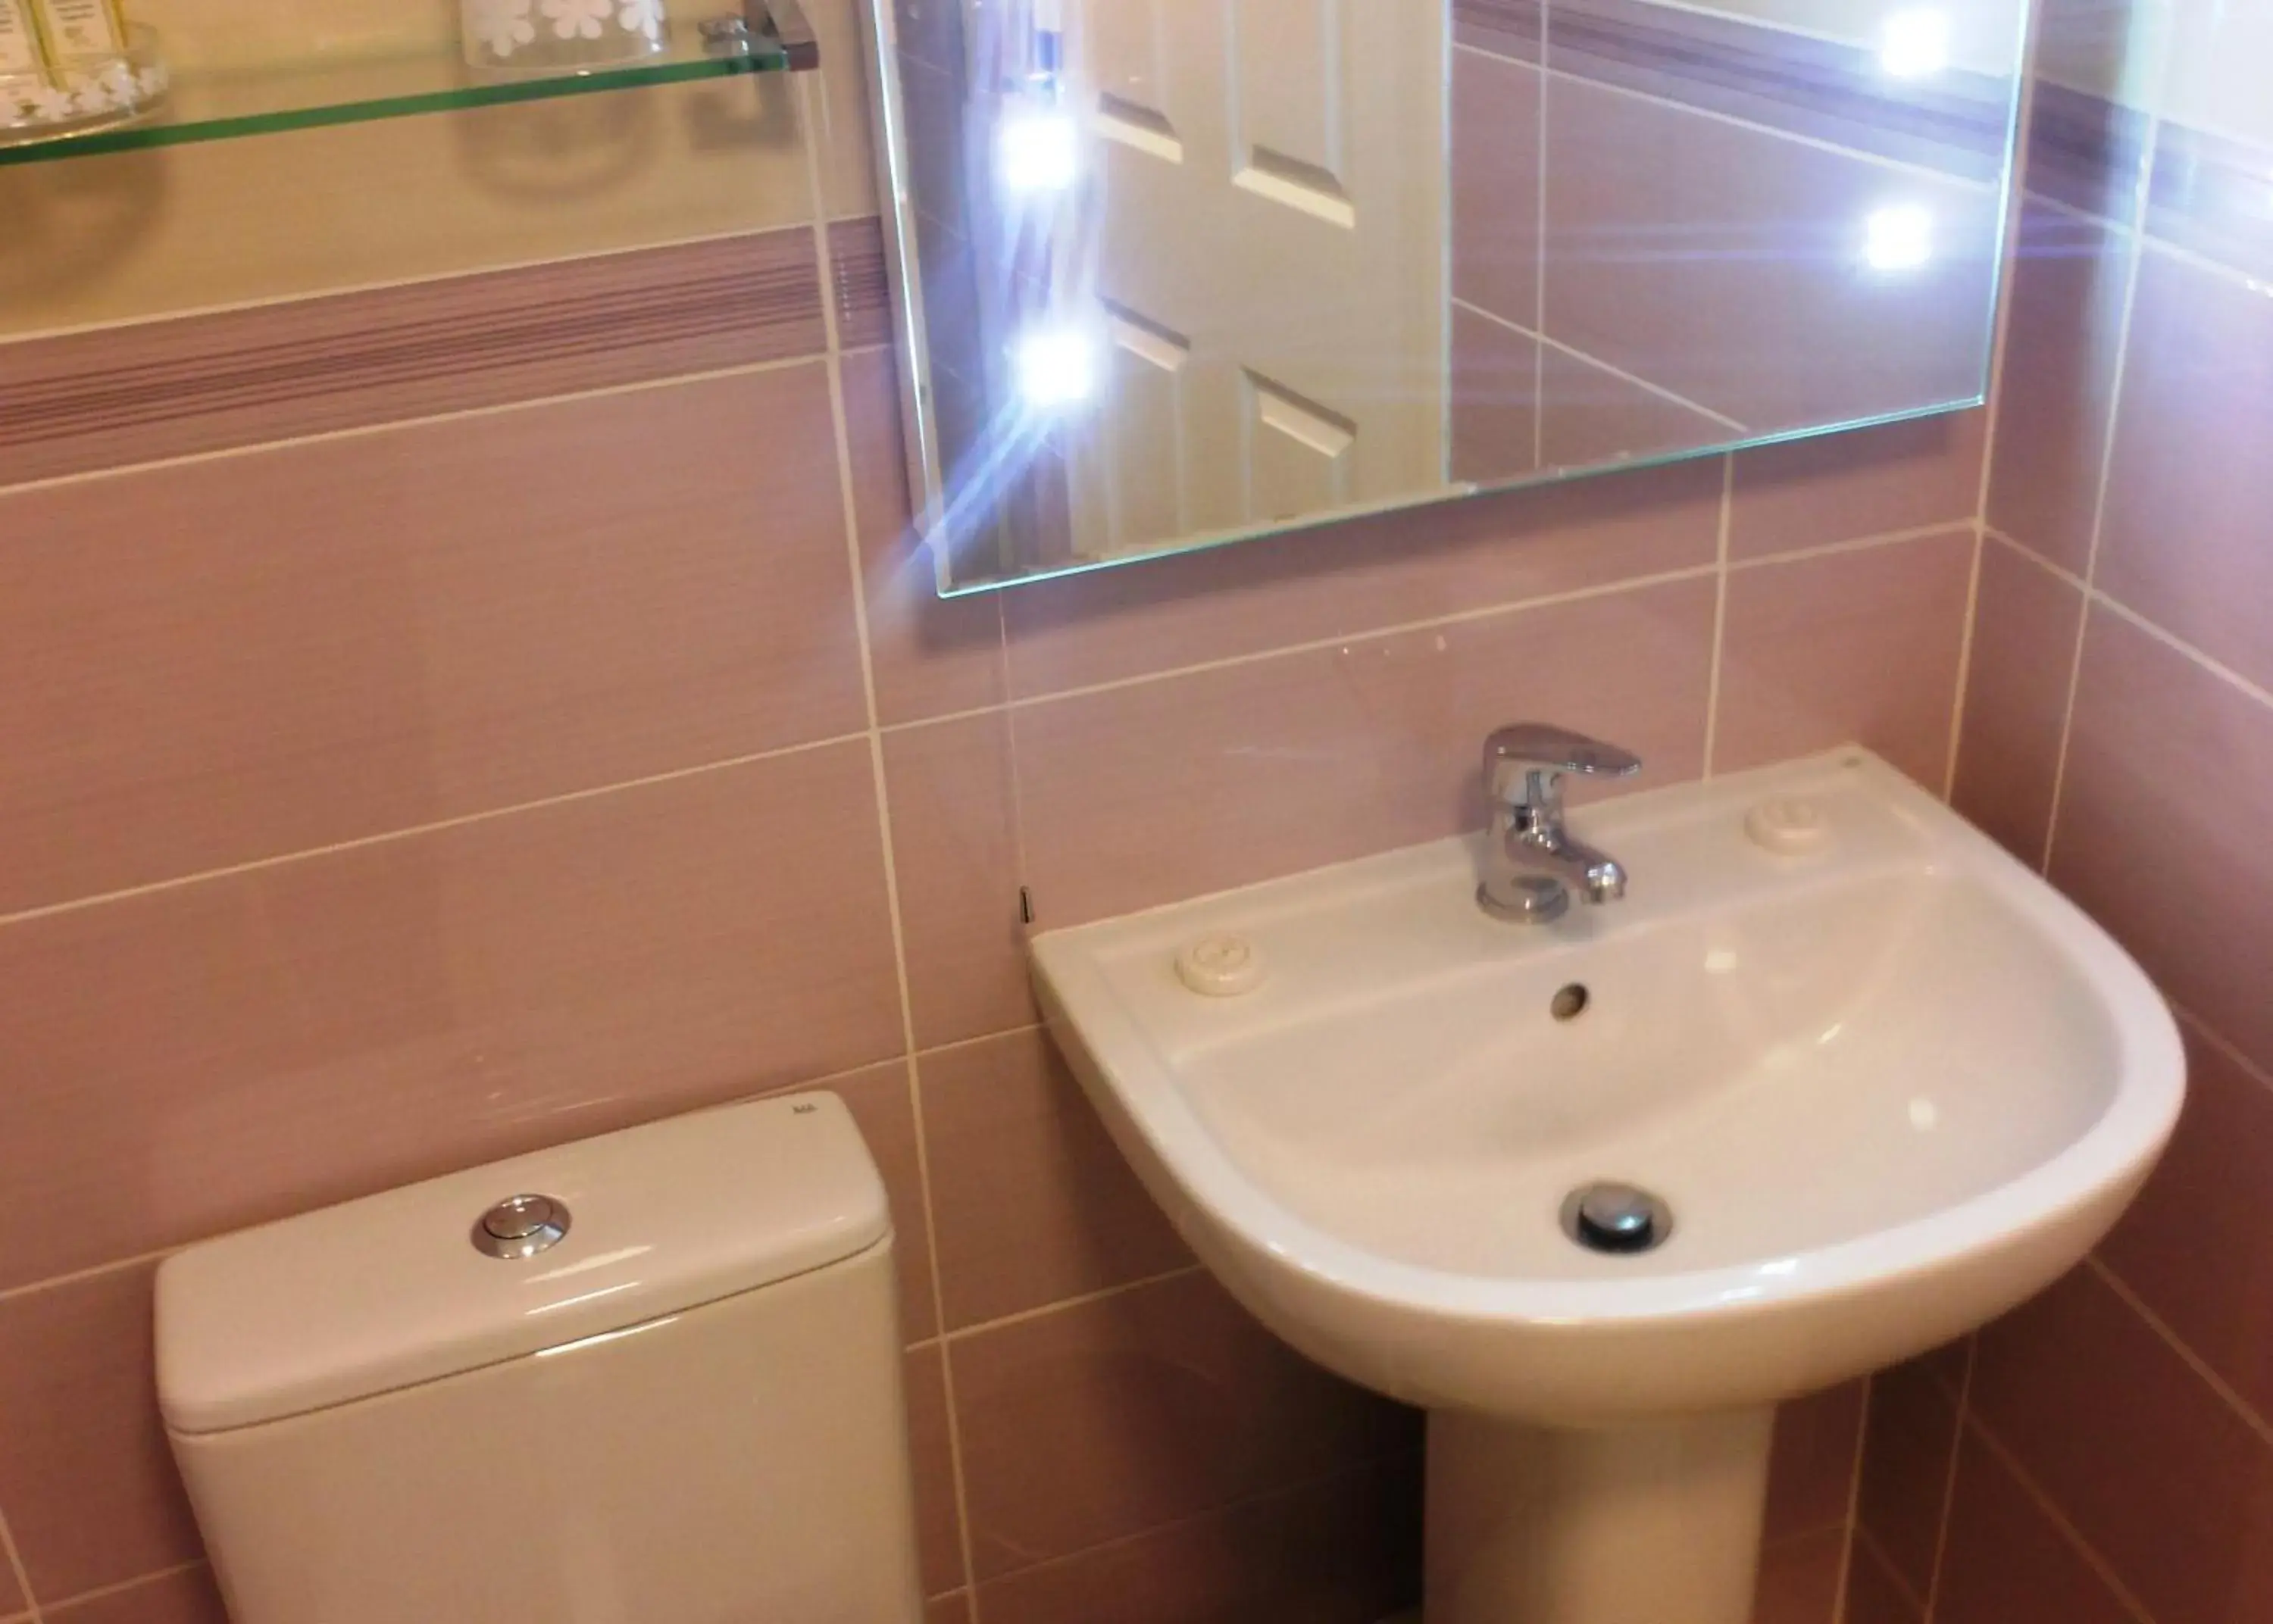 Bathroom in New Inn - Dorchester